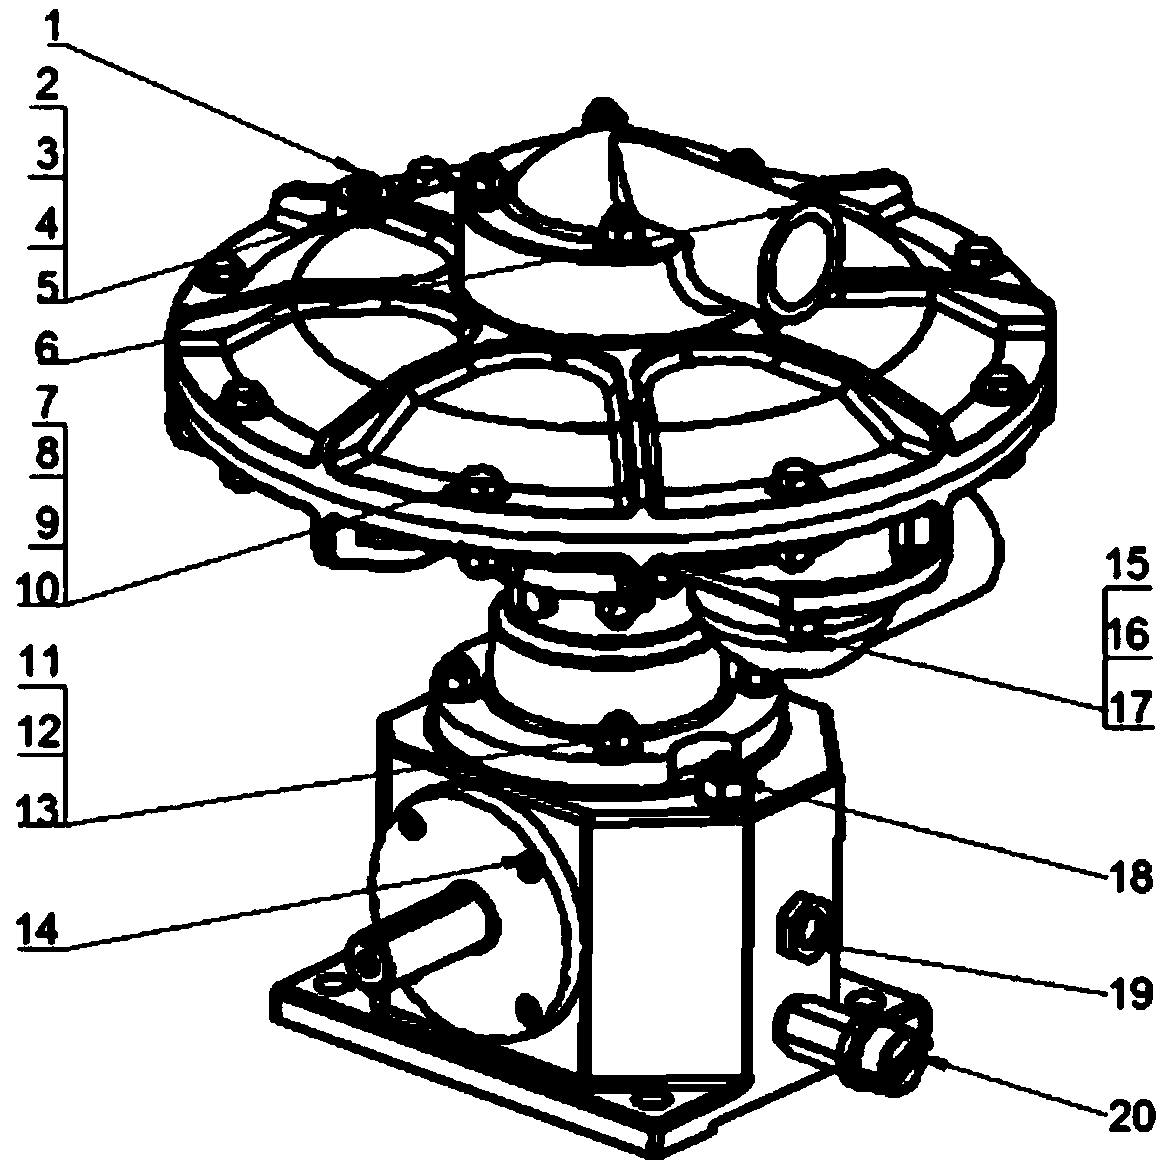 Parasitical auxiliary self-priming vacuum pump